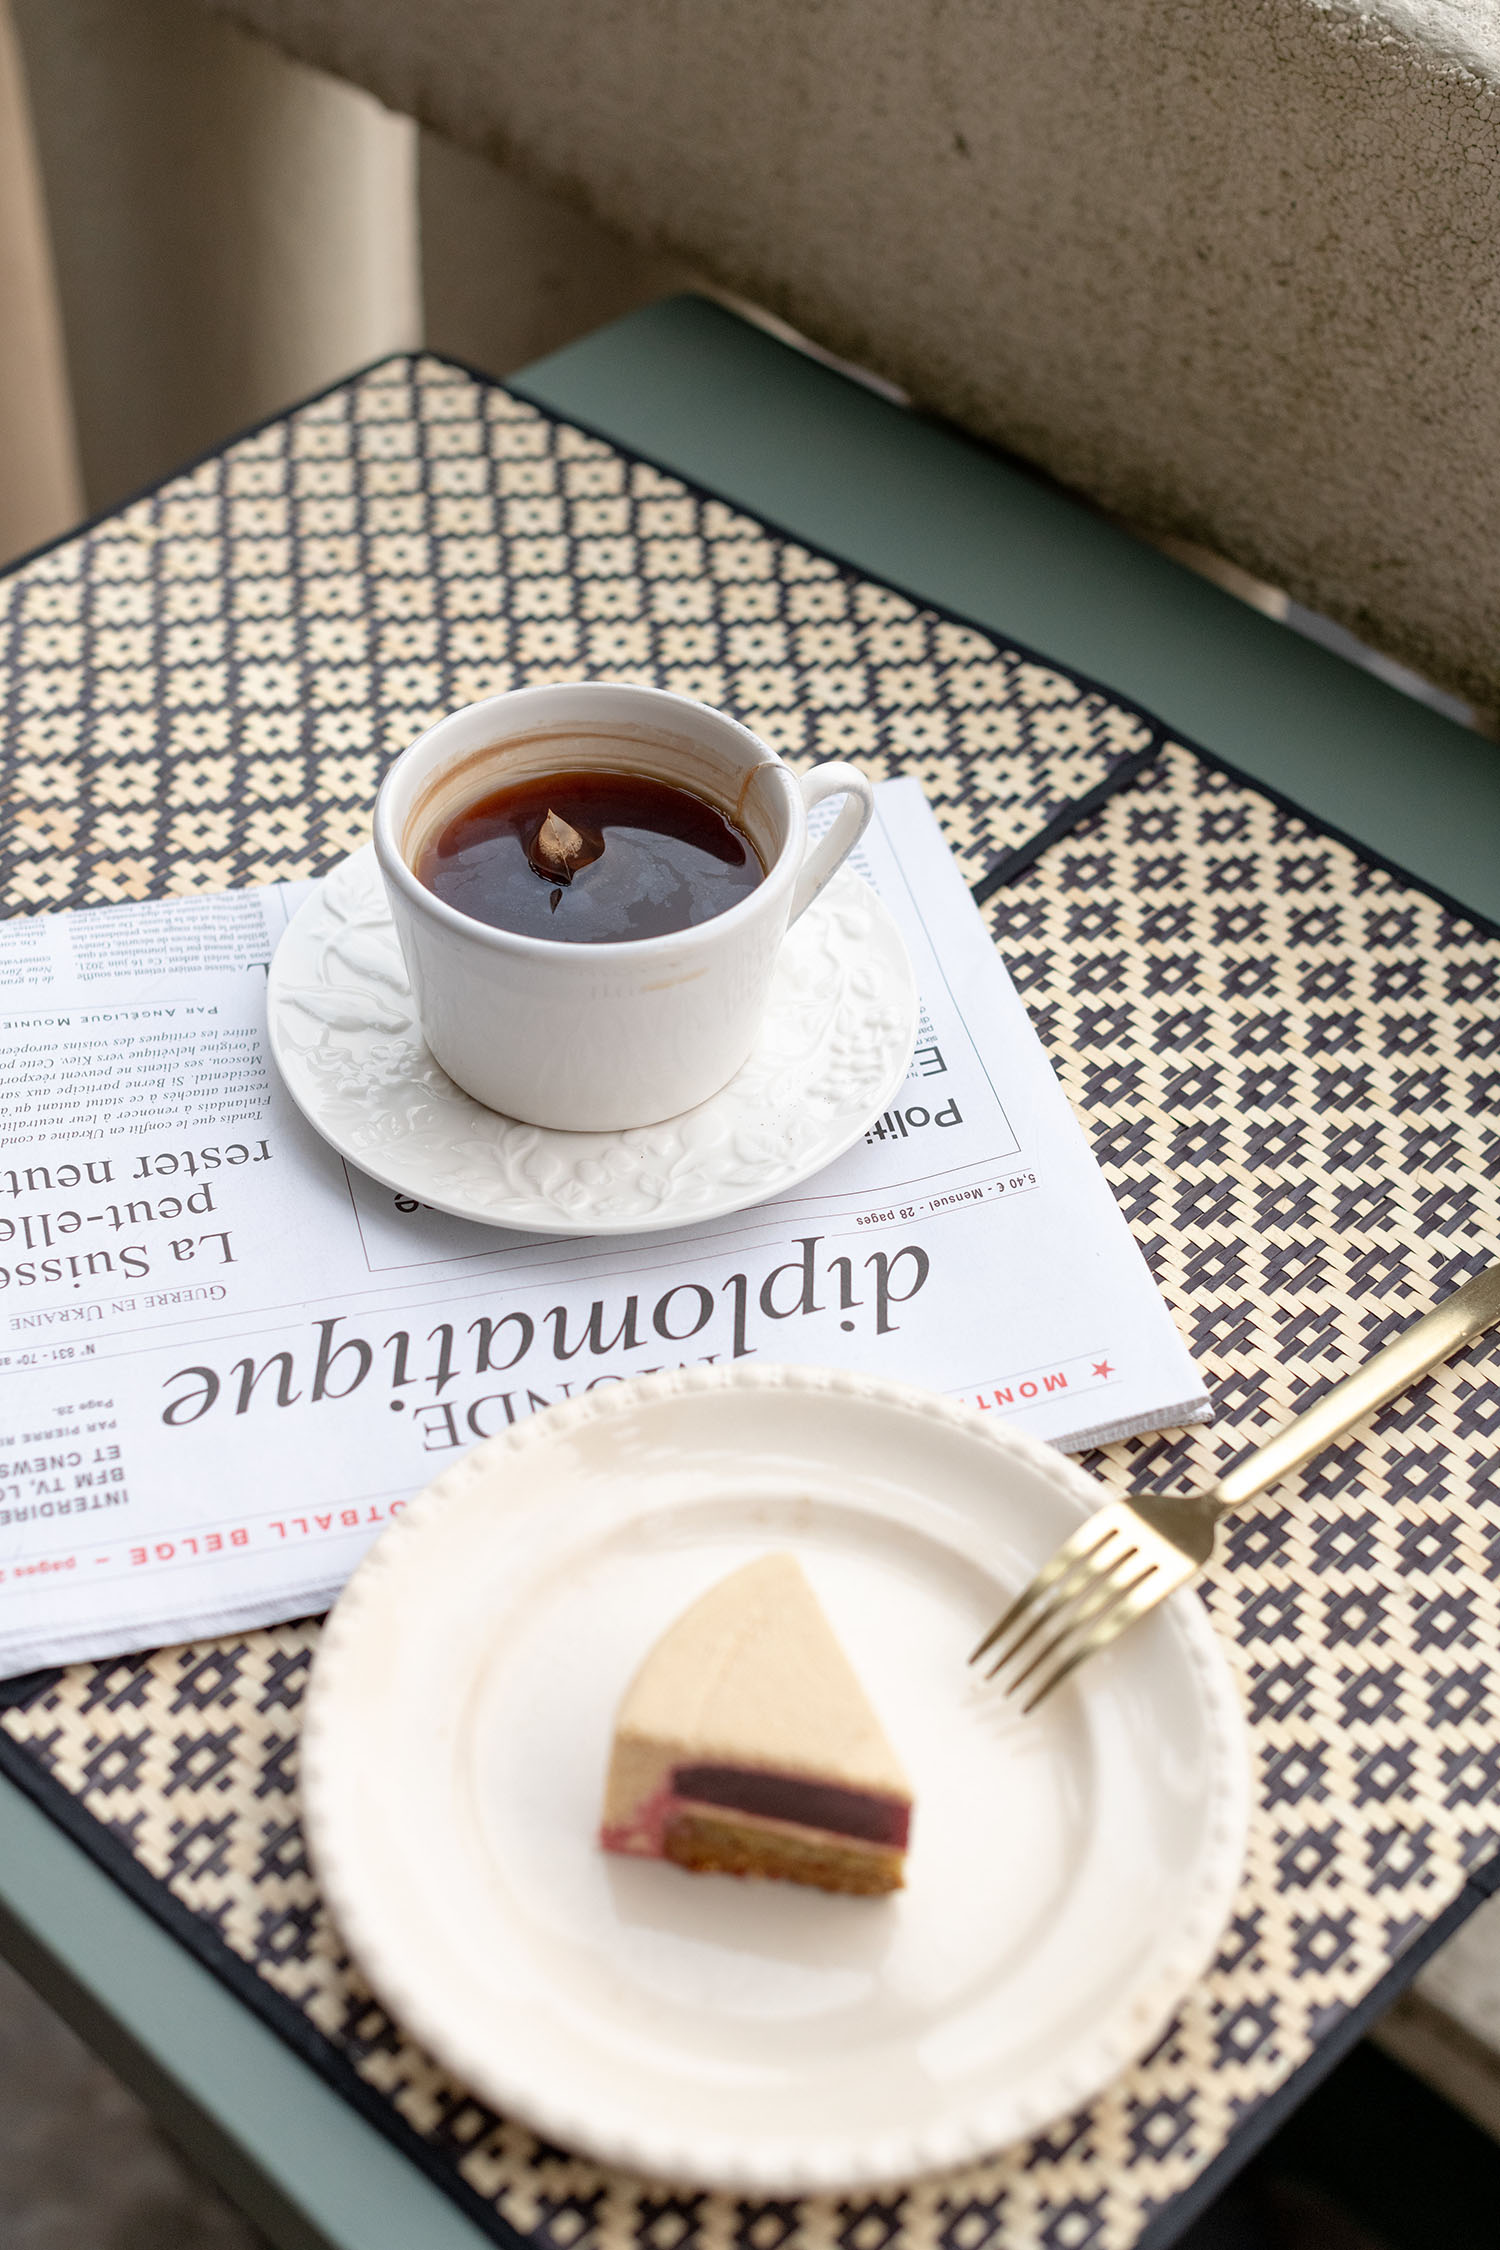 Coco & Voltaire - Zara Home teacup and saucer, Le Monde Diplomatique newspaper, Philippe Conticini cake